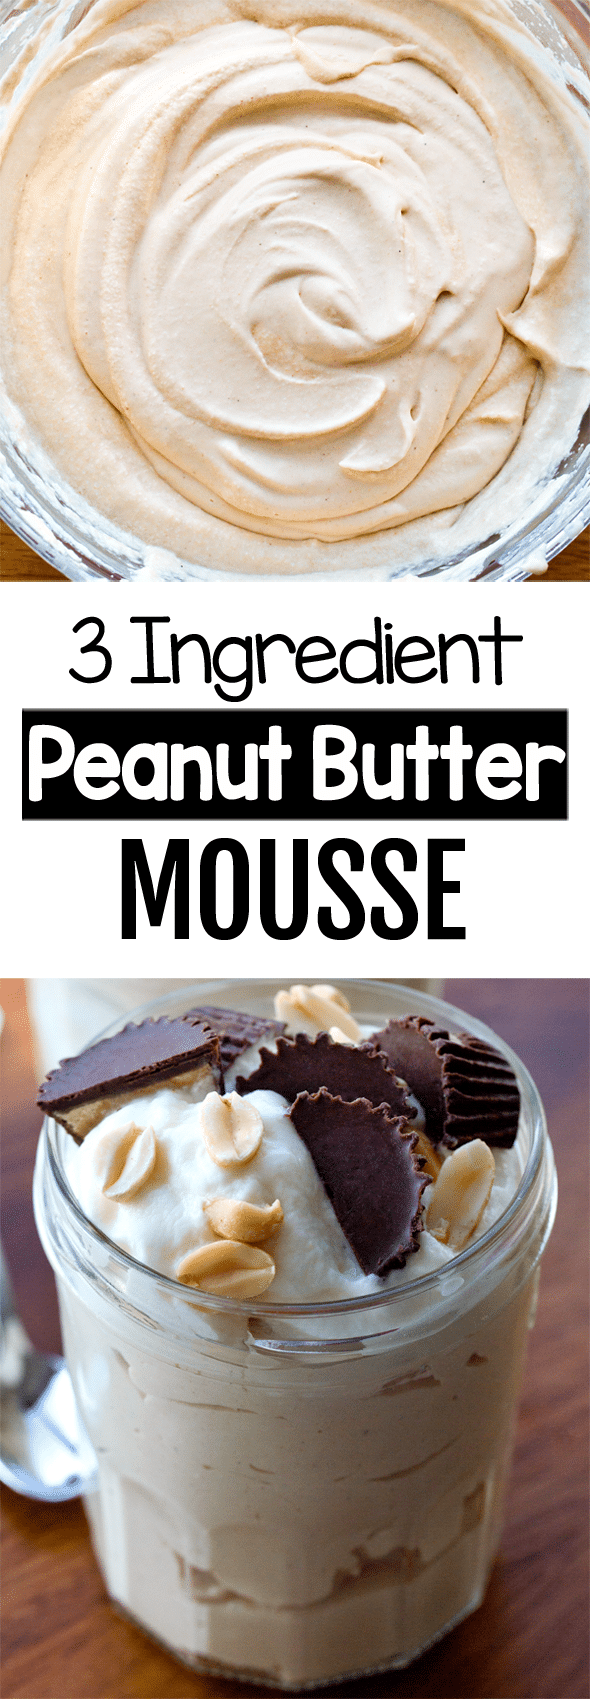 3 Ingredient Peanut Butter Mousse Recipe